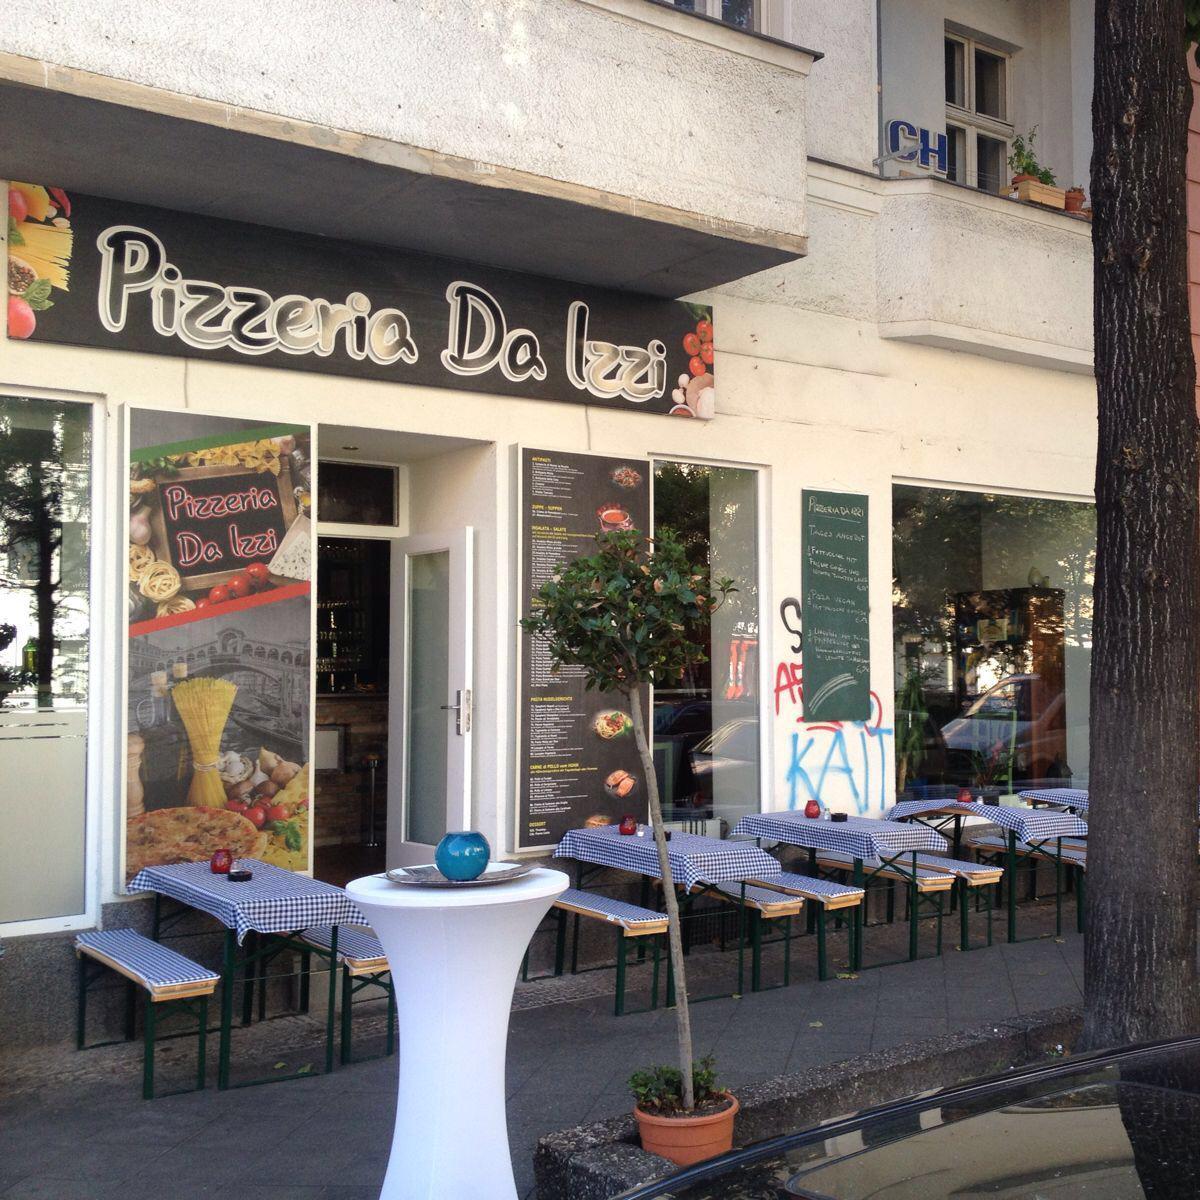 Restaurant "Pizzeria da Izzi" in Berlin